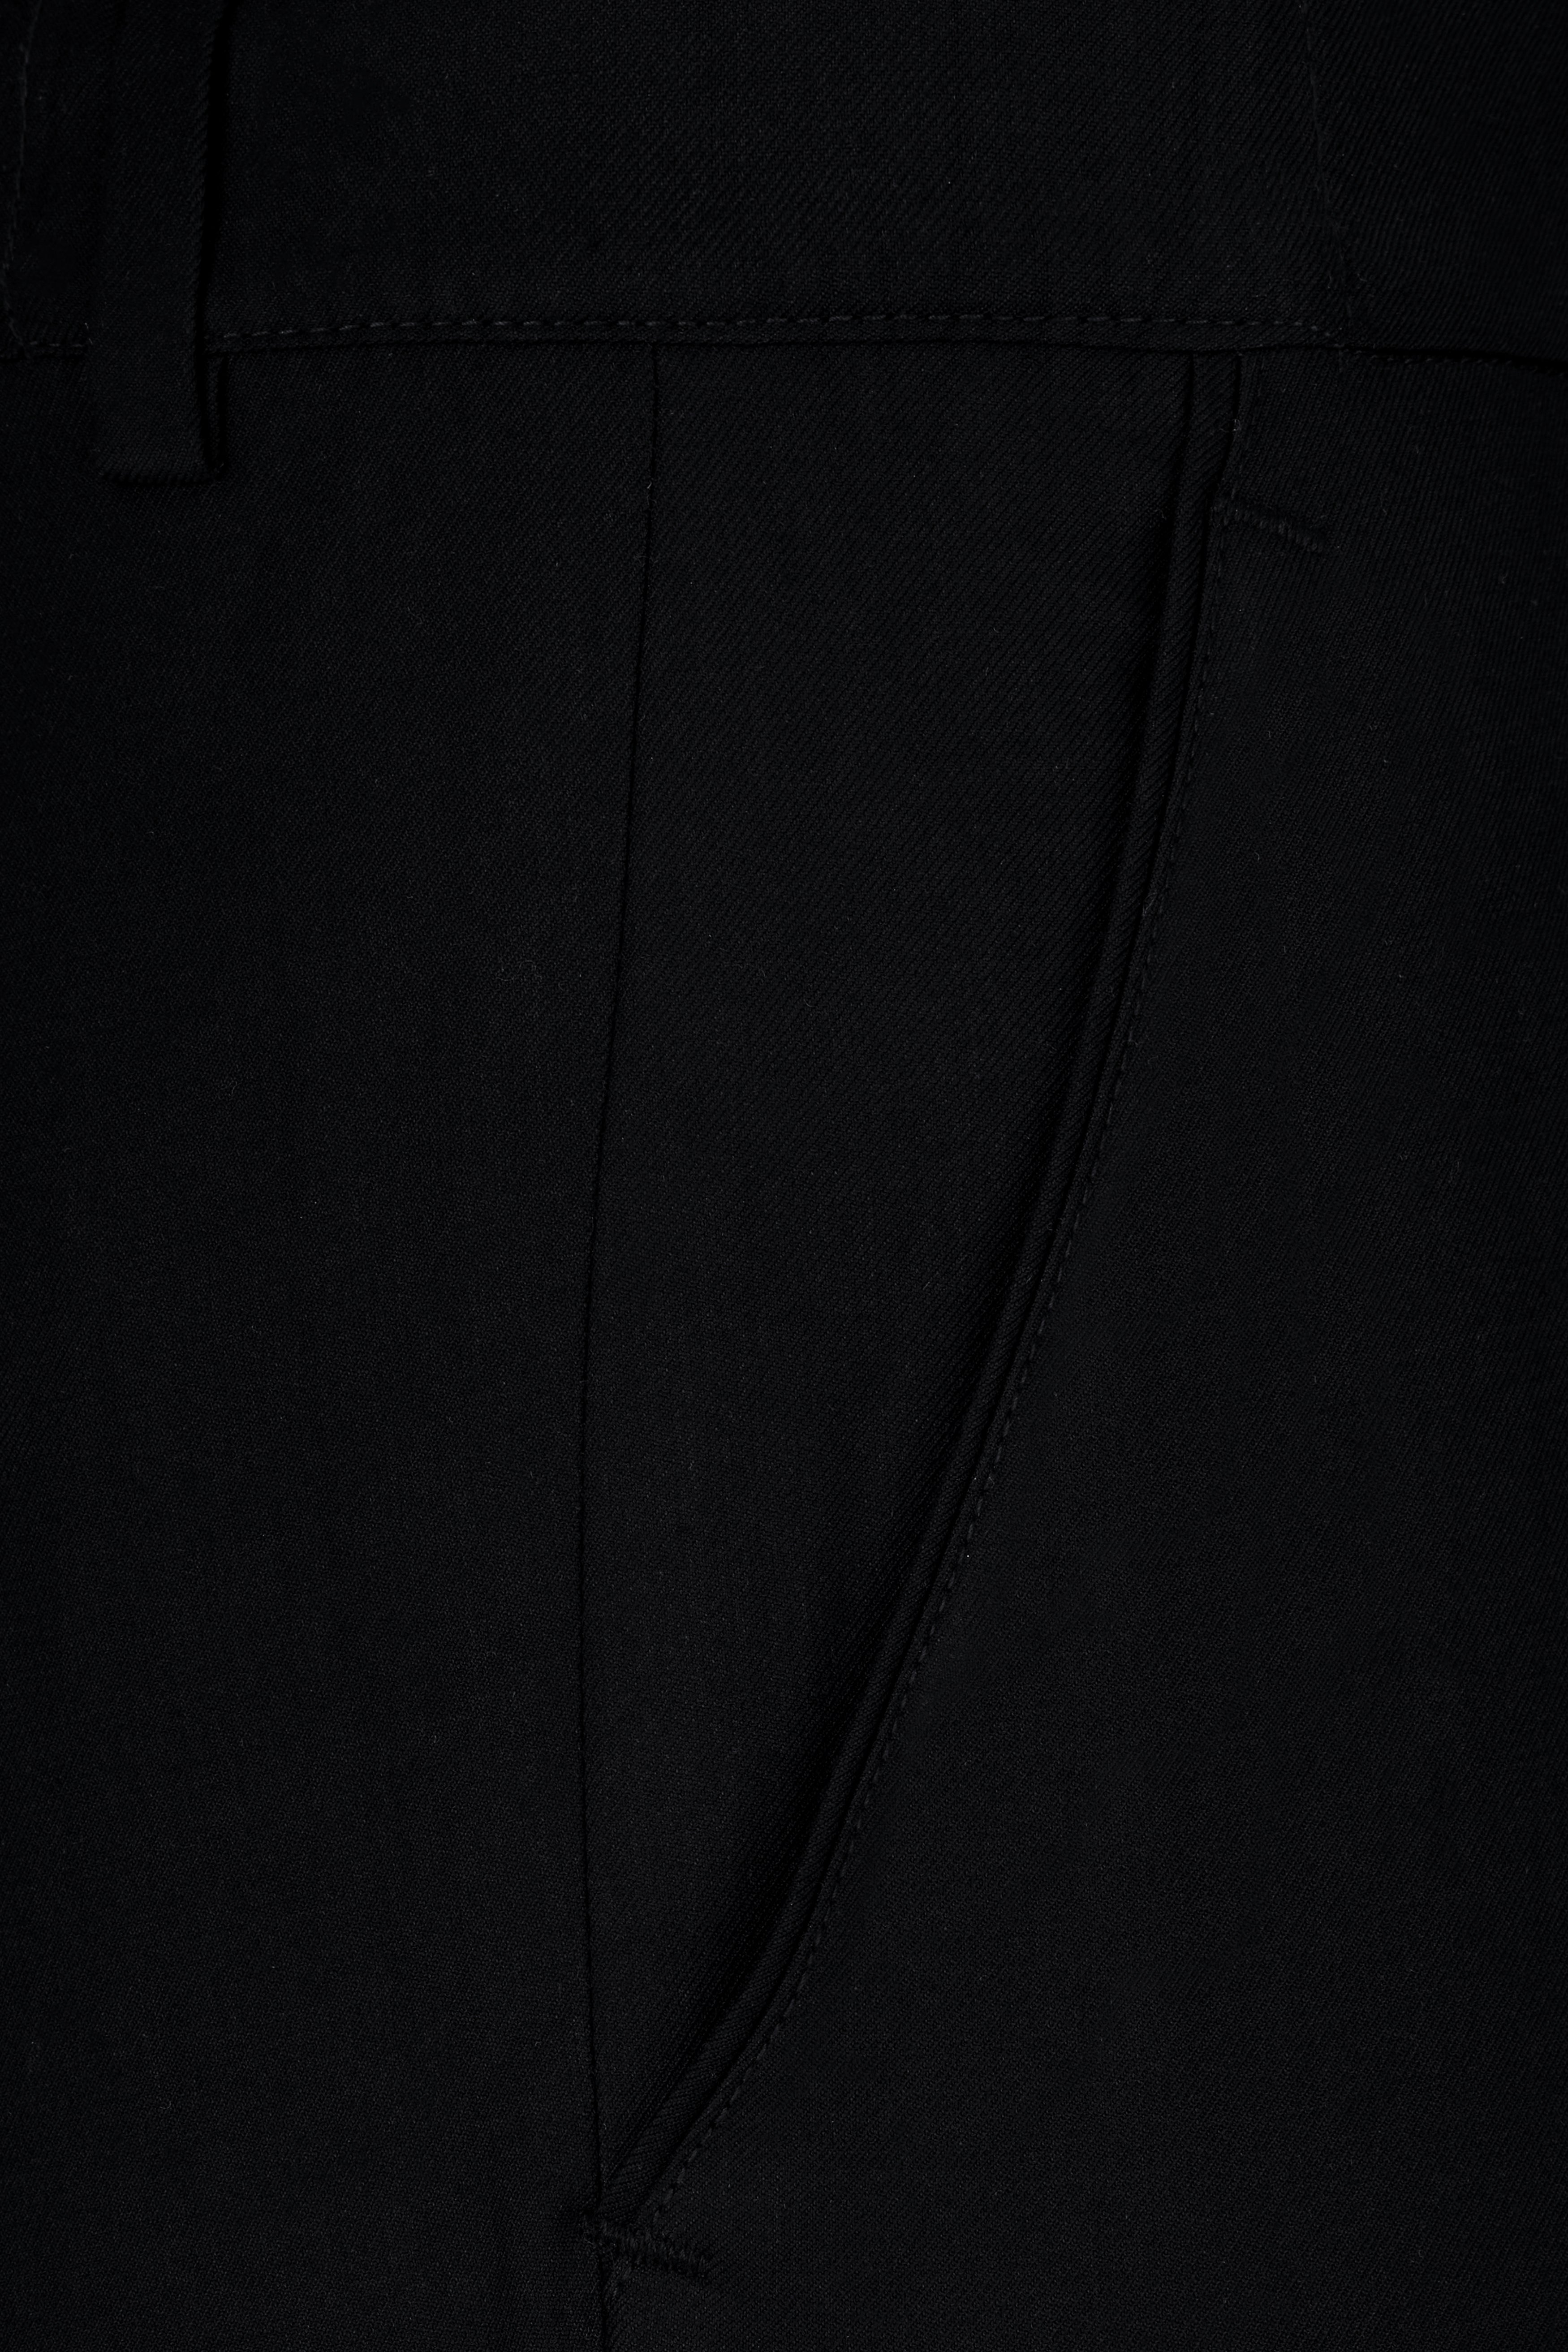 Jade Black Wool Rich Deer Hand Crafted Embroidered Bandhgala Designer Suit ST2870-BG-LB-E189-36,ST2870-BG-LB-E189-38,ST2870-BG-LB-E189-40,ST2870-BG-LB-E189-42,ST2870-BG-LB-E189-44,ST2870-BG-LB-E189-46,ST2870-BG-LB-E189-48,ST2870-BG-LB-E189-50,ST2870-BG-LB-E189-52,ST2870-BG-LB-E189-54,ST2870-BG-LB-E189-56,ST2870-BG-LB-E189-58,ST2870-BG-LB-E189-60